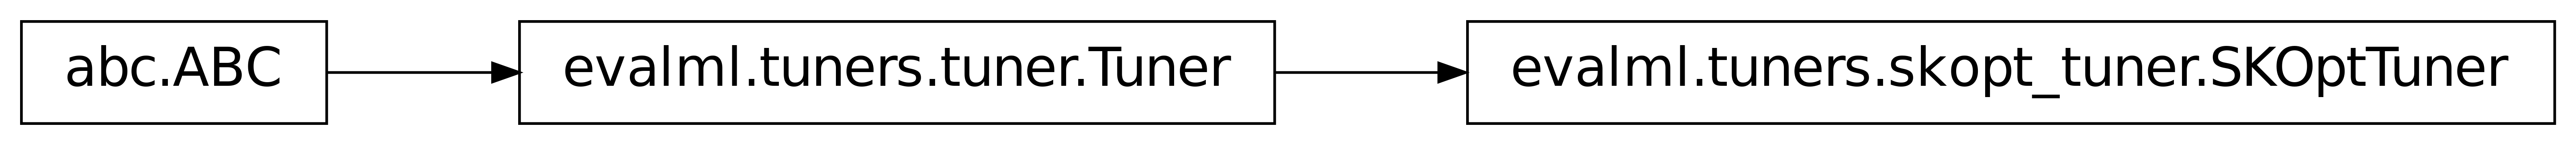 Inheritance diagram of SKOptTuner